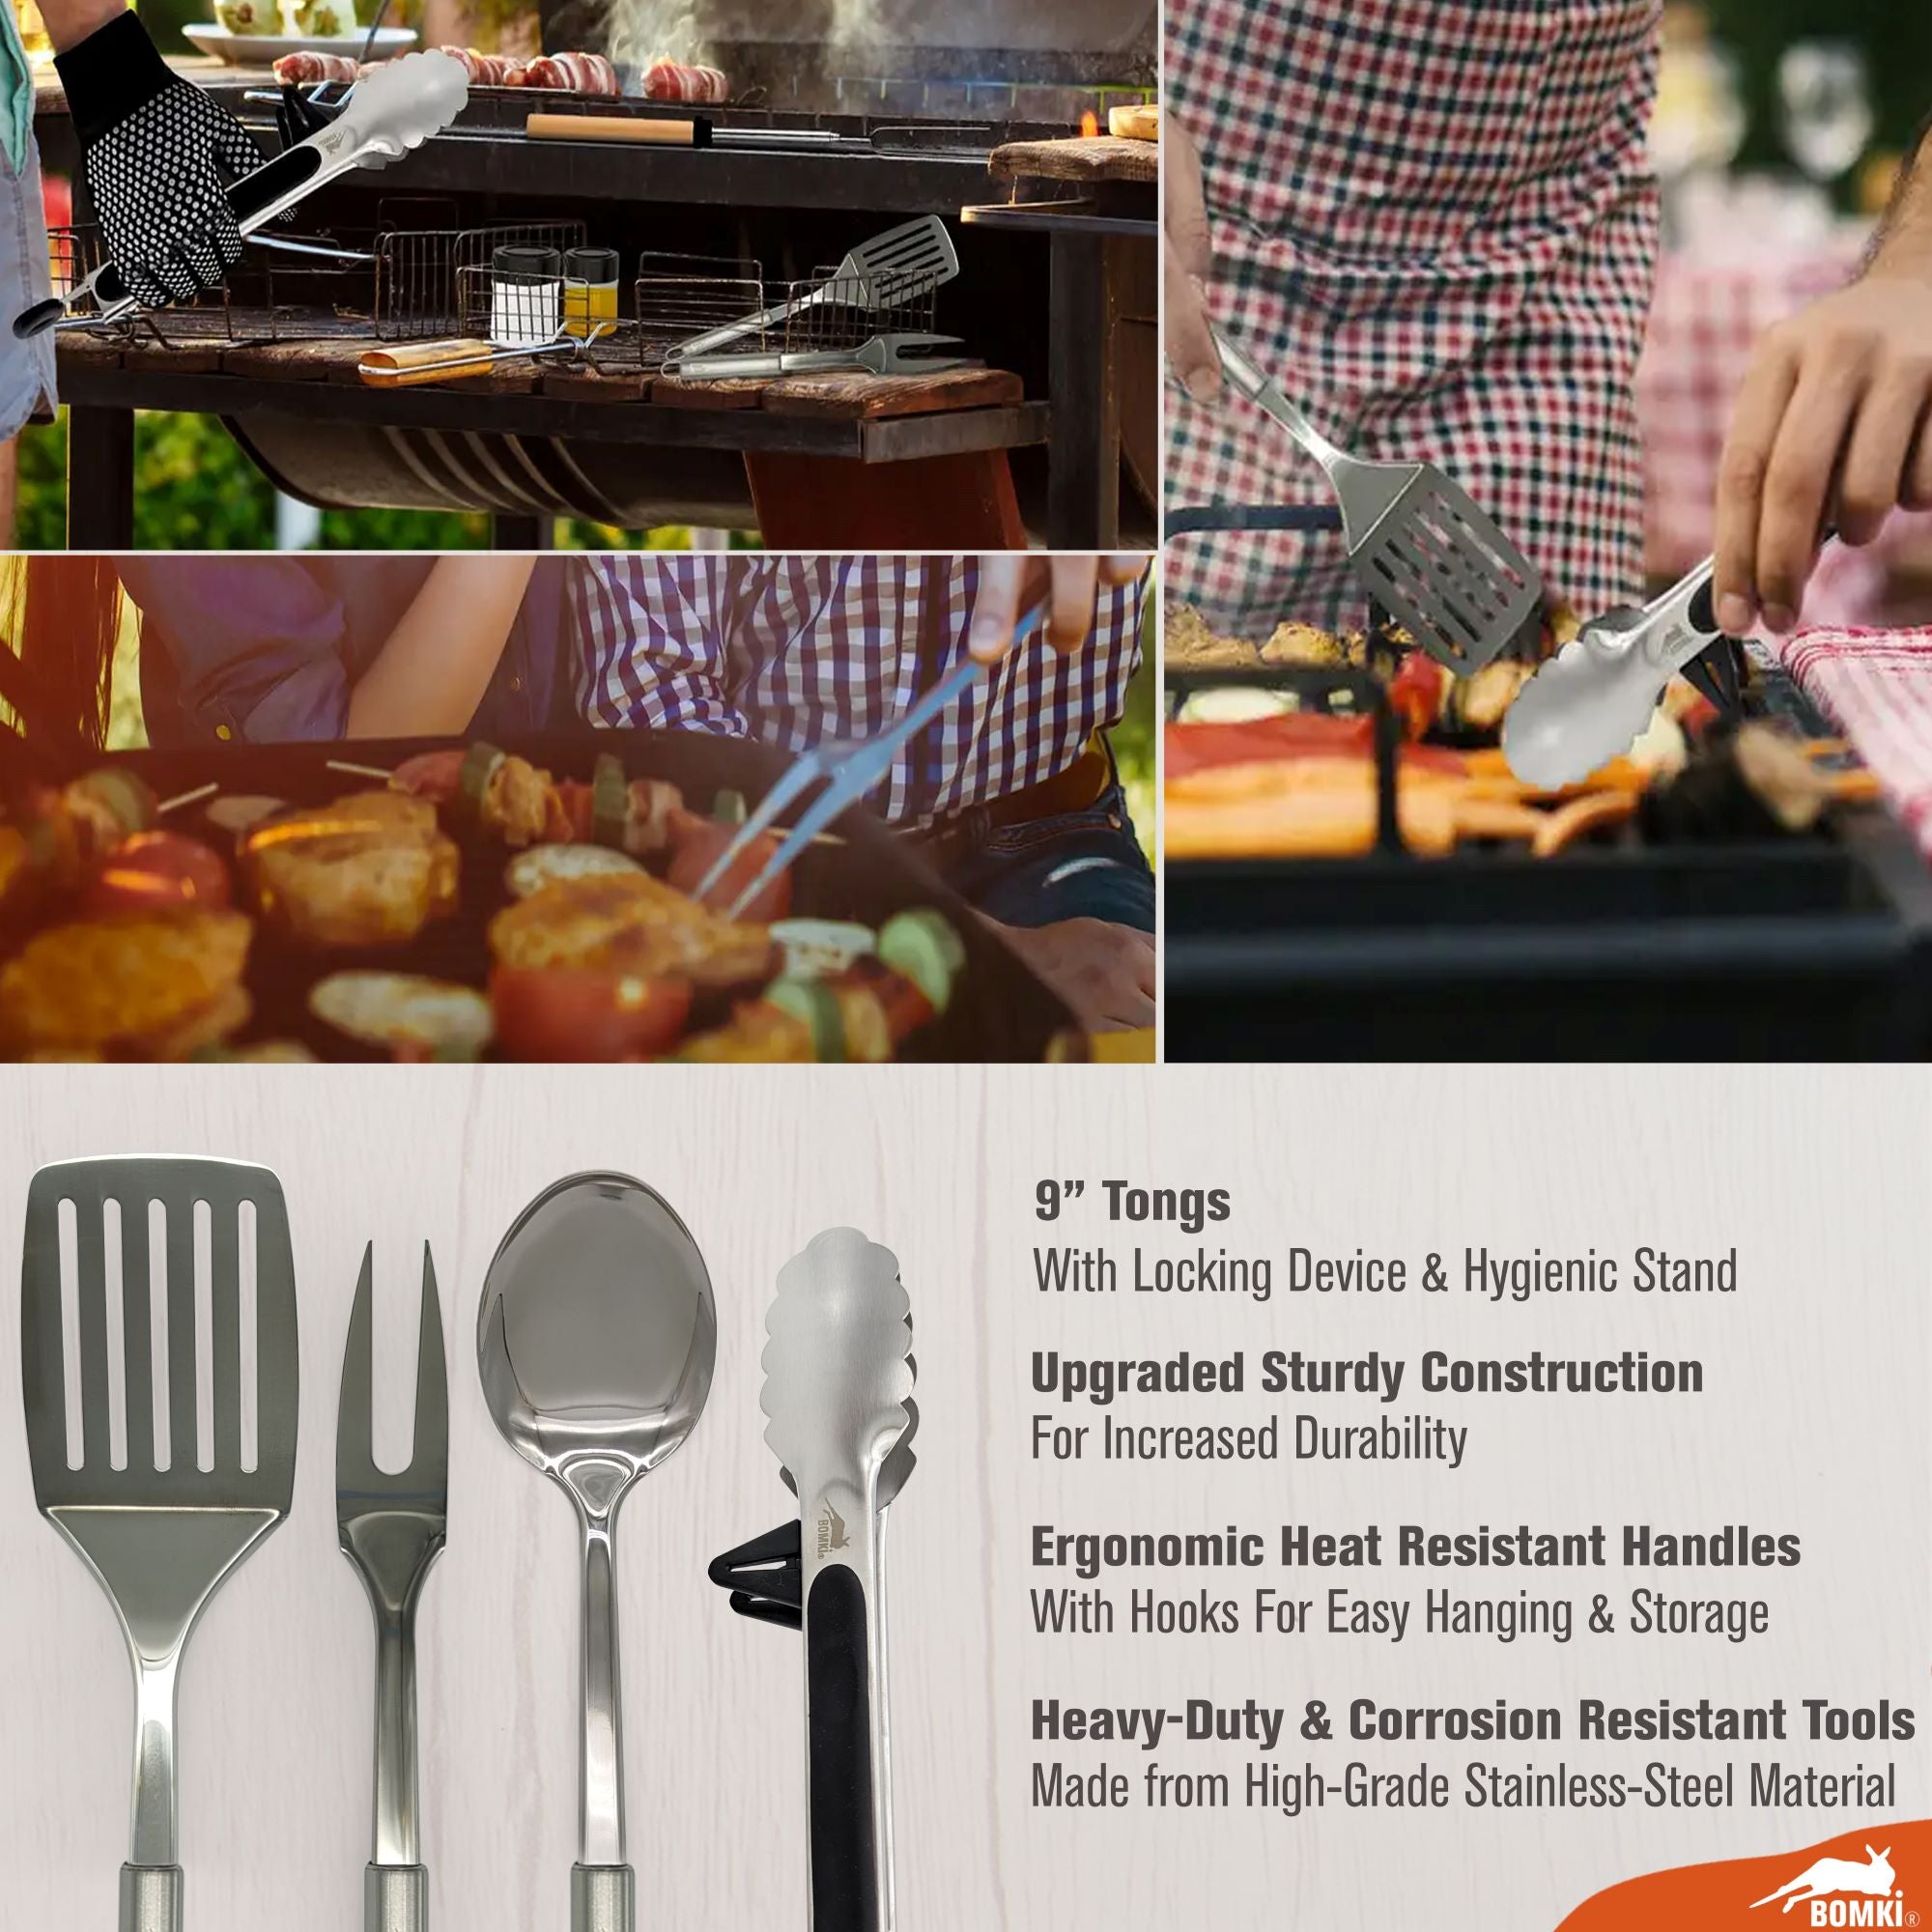 BOMKI 35 PC Grilling & Cooking Essentials - Black Pro